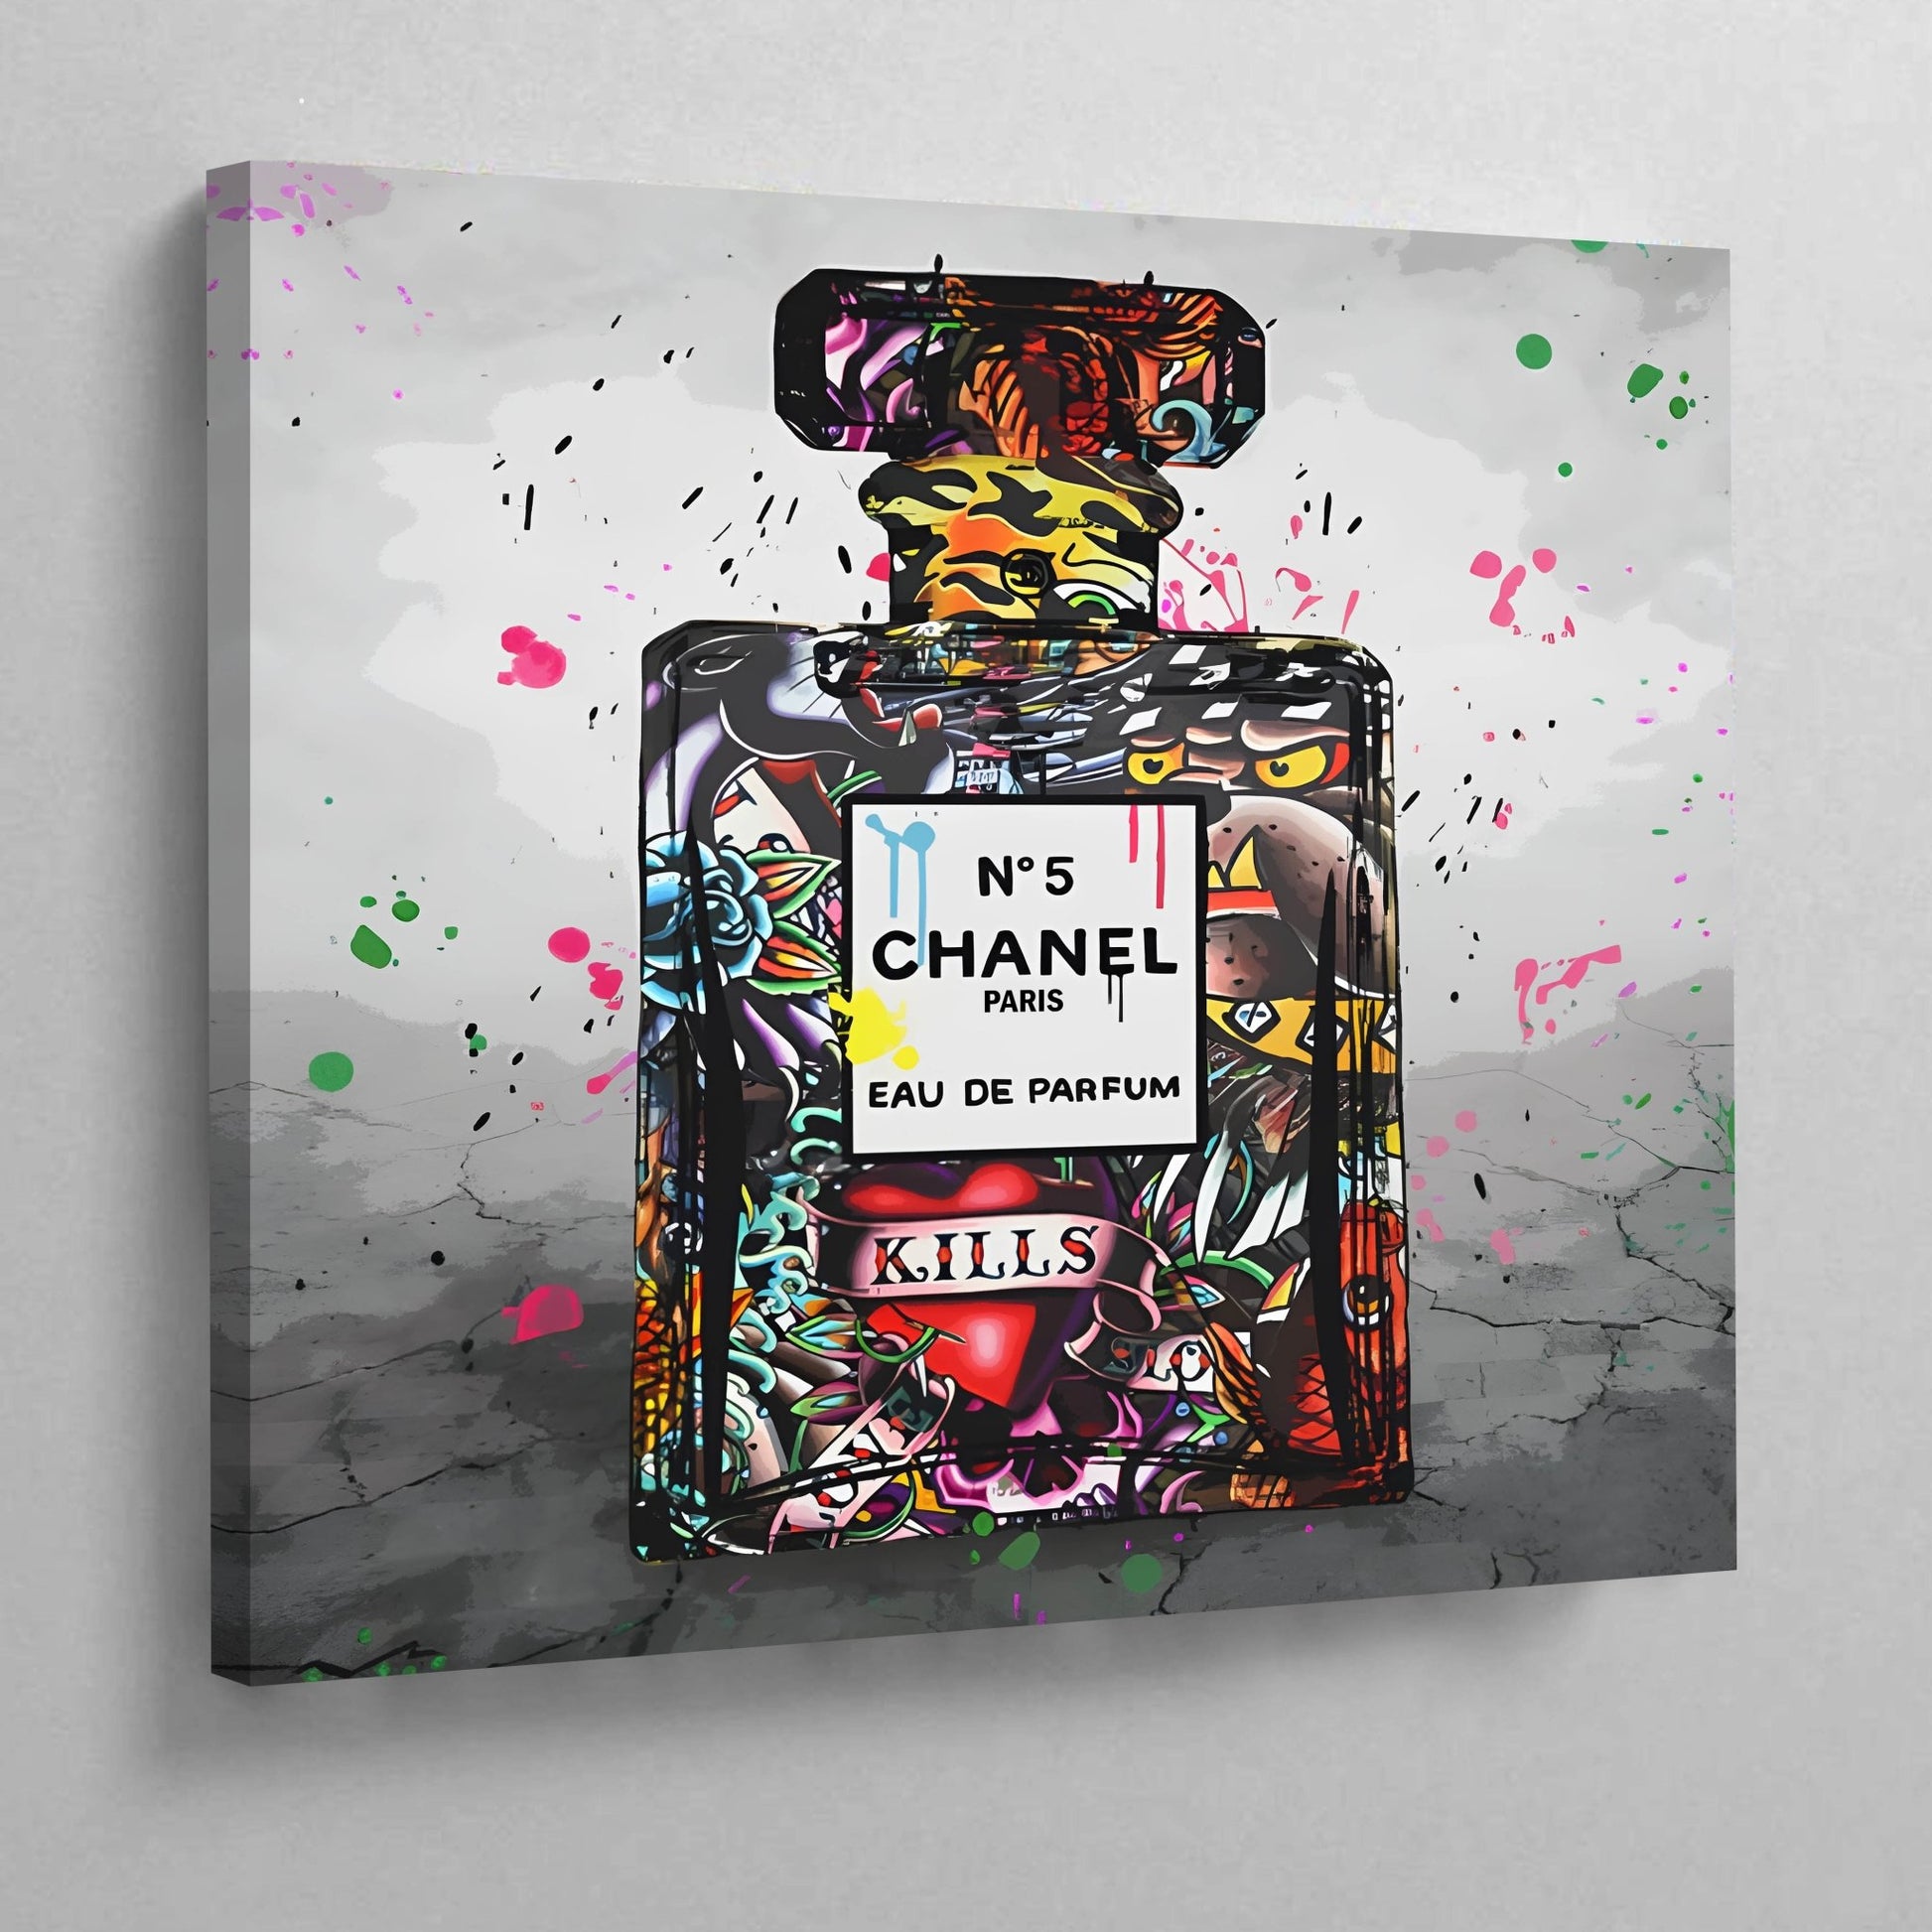 DIY Chanel Perfume Bottle Room Decor & Chanel Canvas Wall Decor